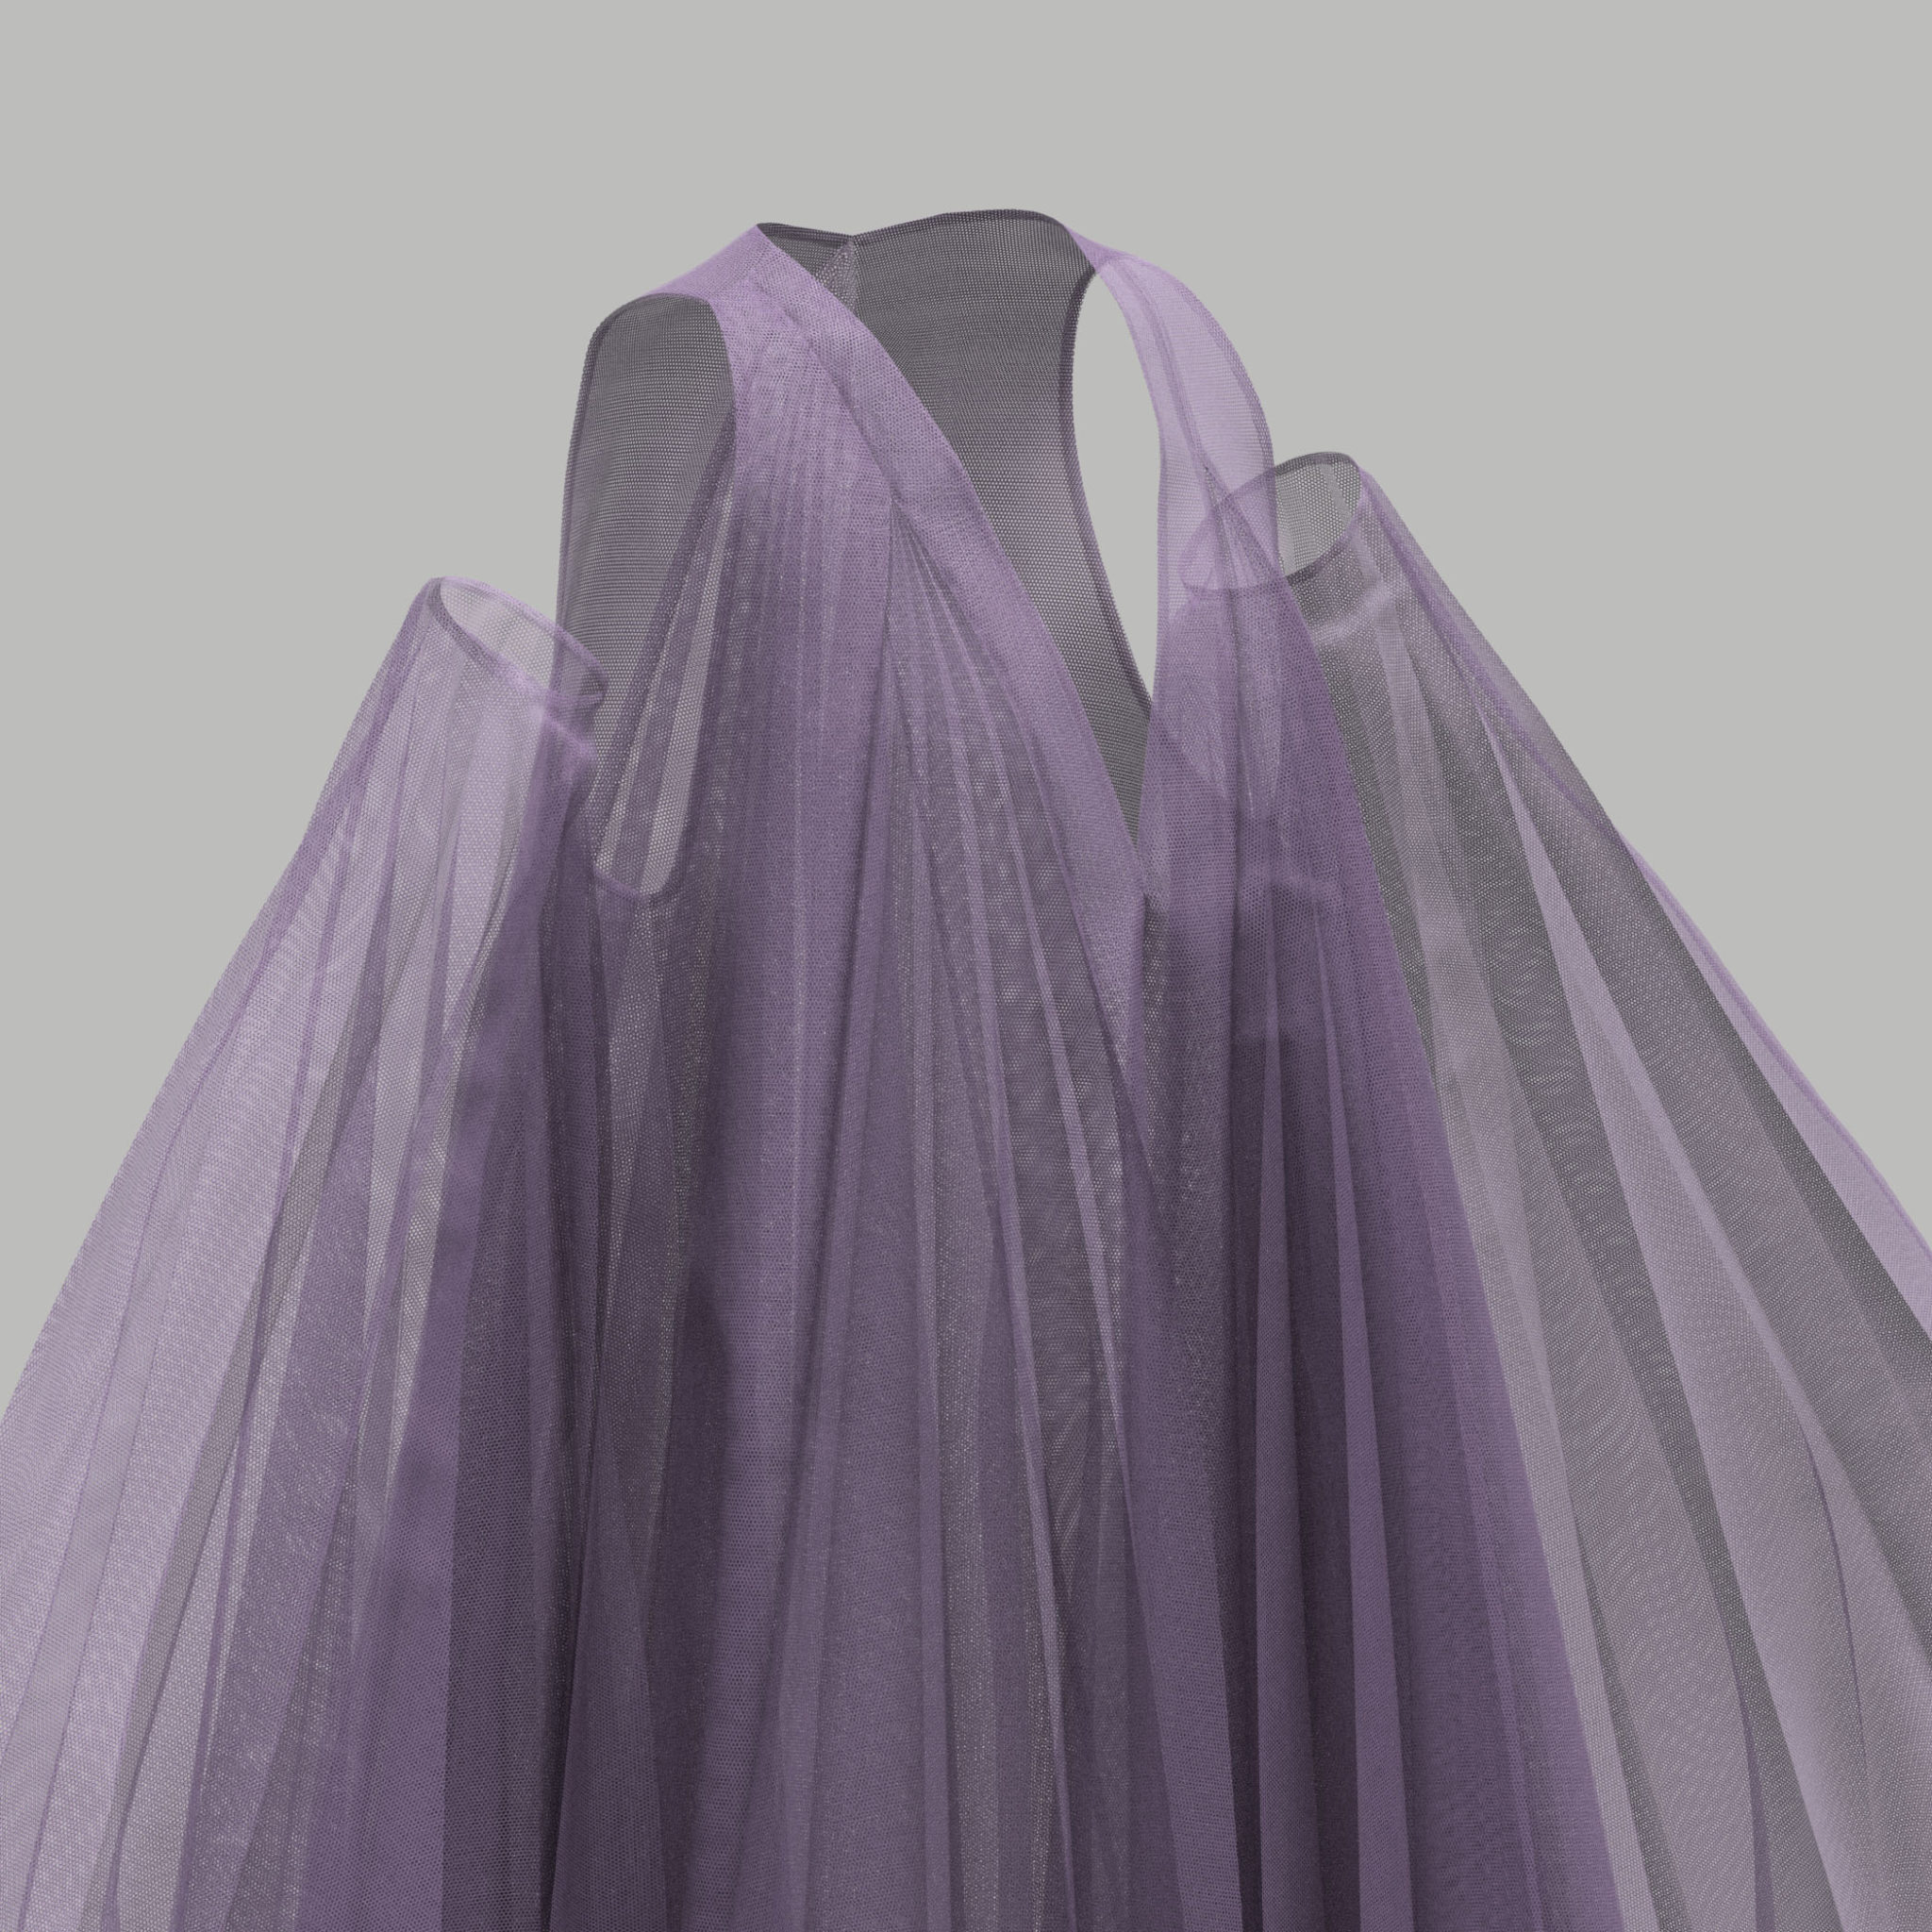 Digital tulle dress